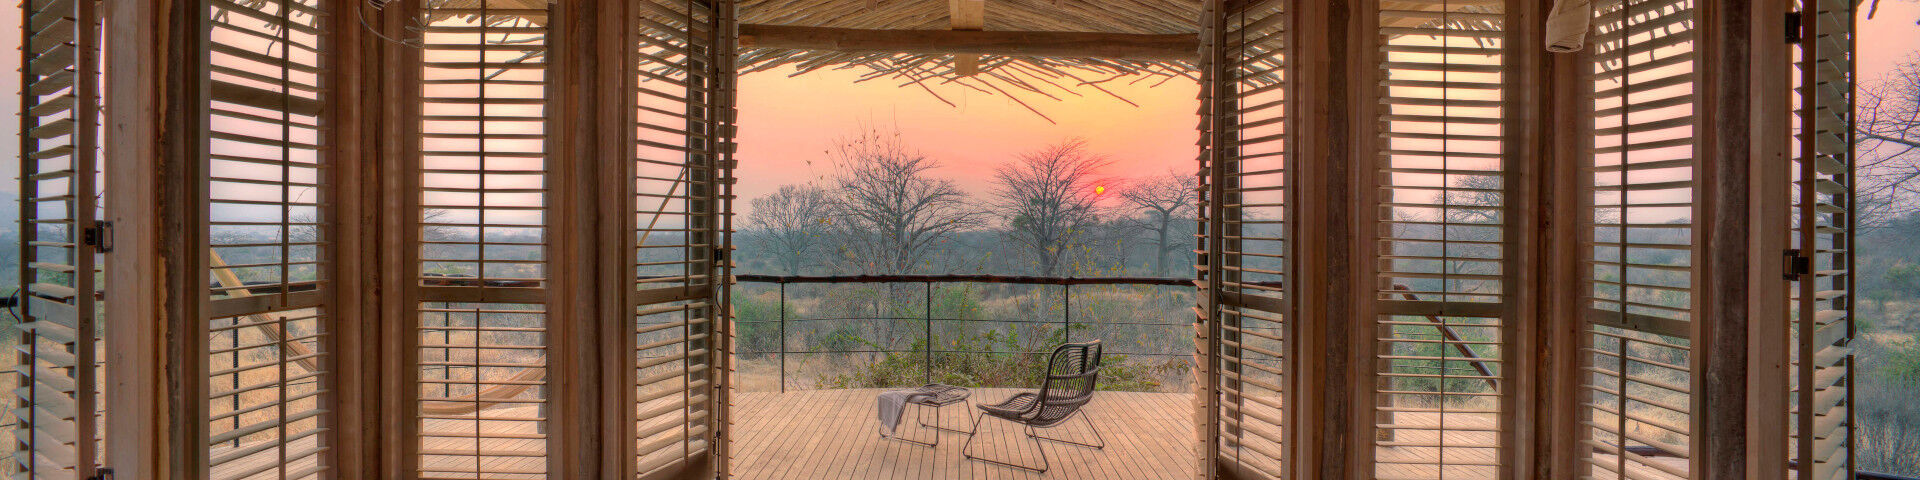 Accommodation in Ruaha National Park Tanzania Sunset from Bedroom